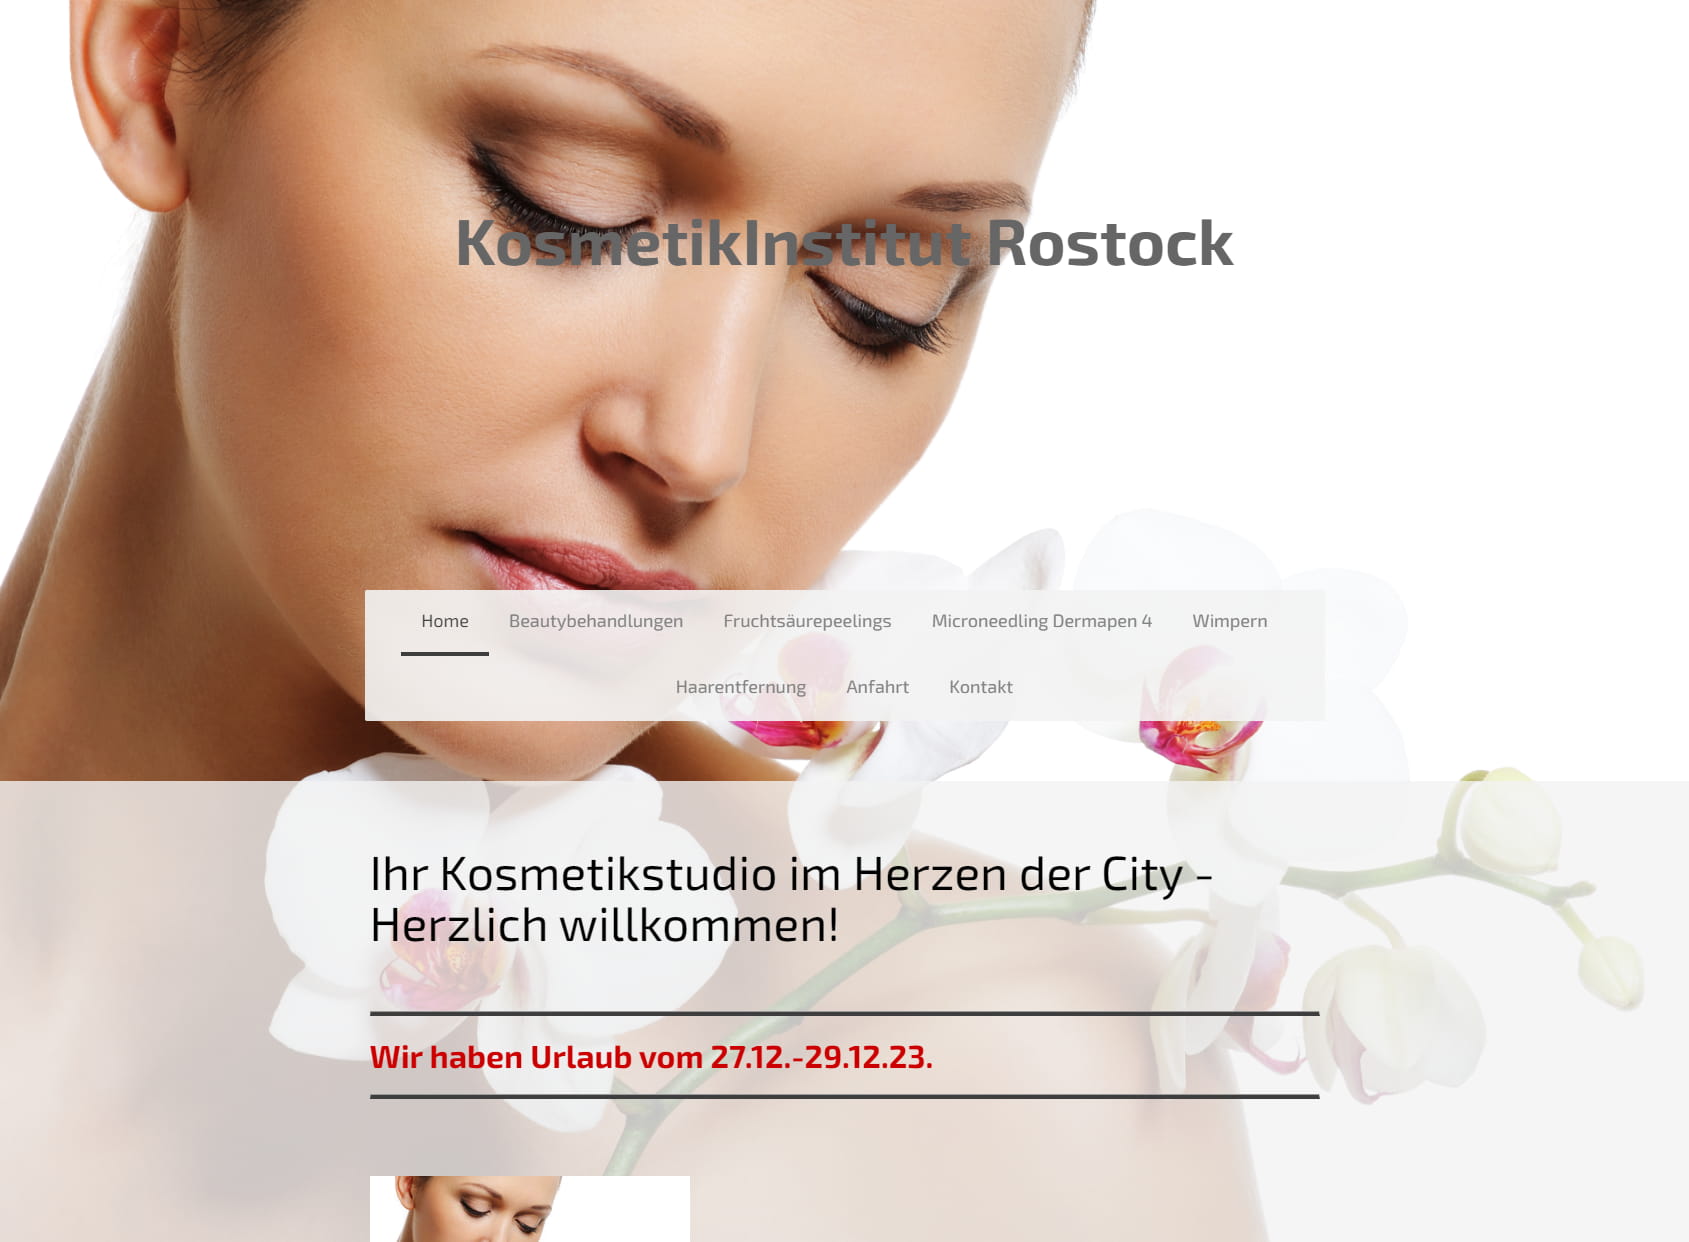 KosmetikInstitut Rostock